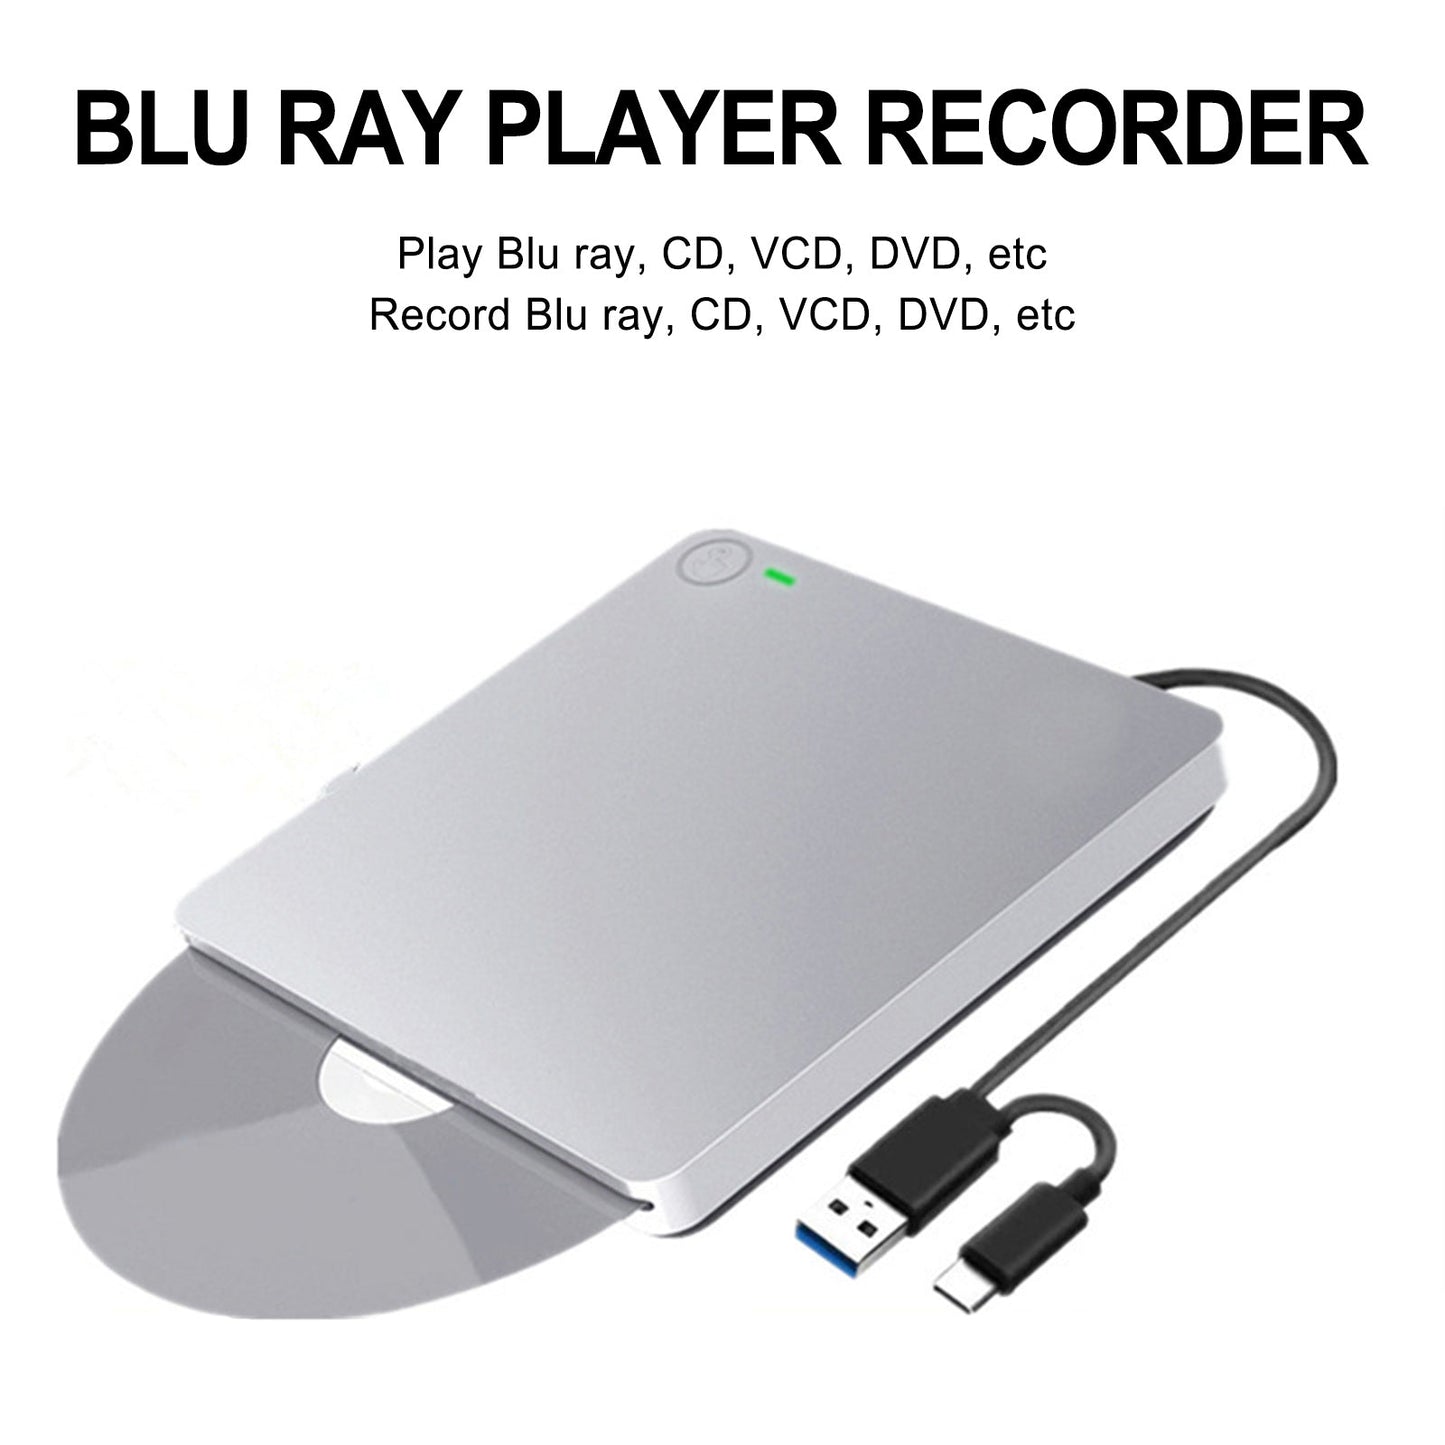 Genuine Bluray Burner External USB 3.0 Player DVD CD BD Recorder Drive Silver